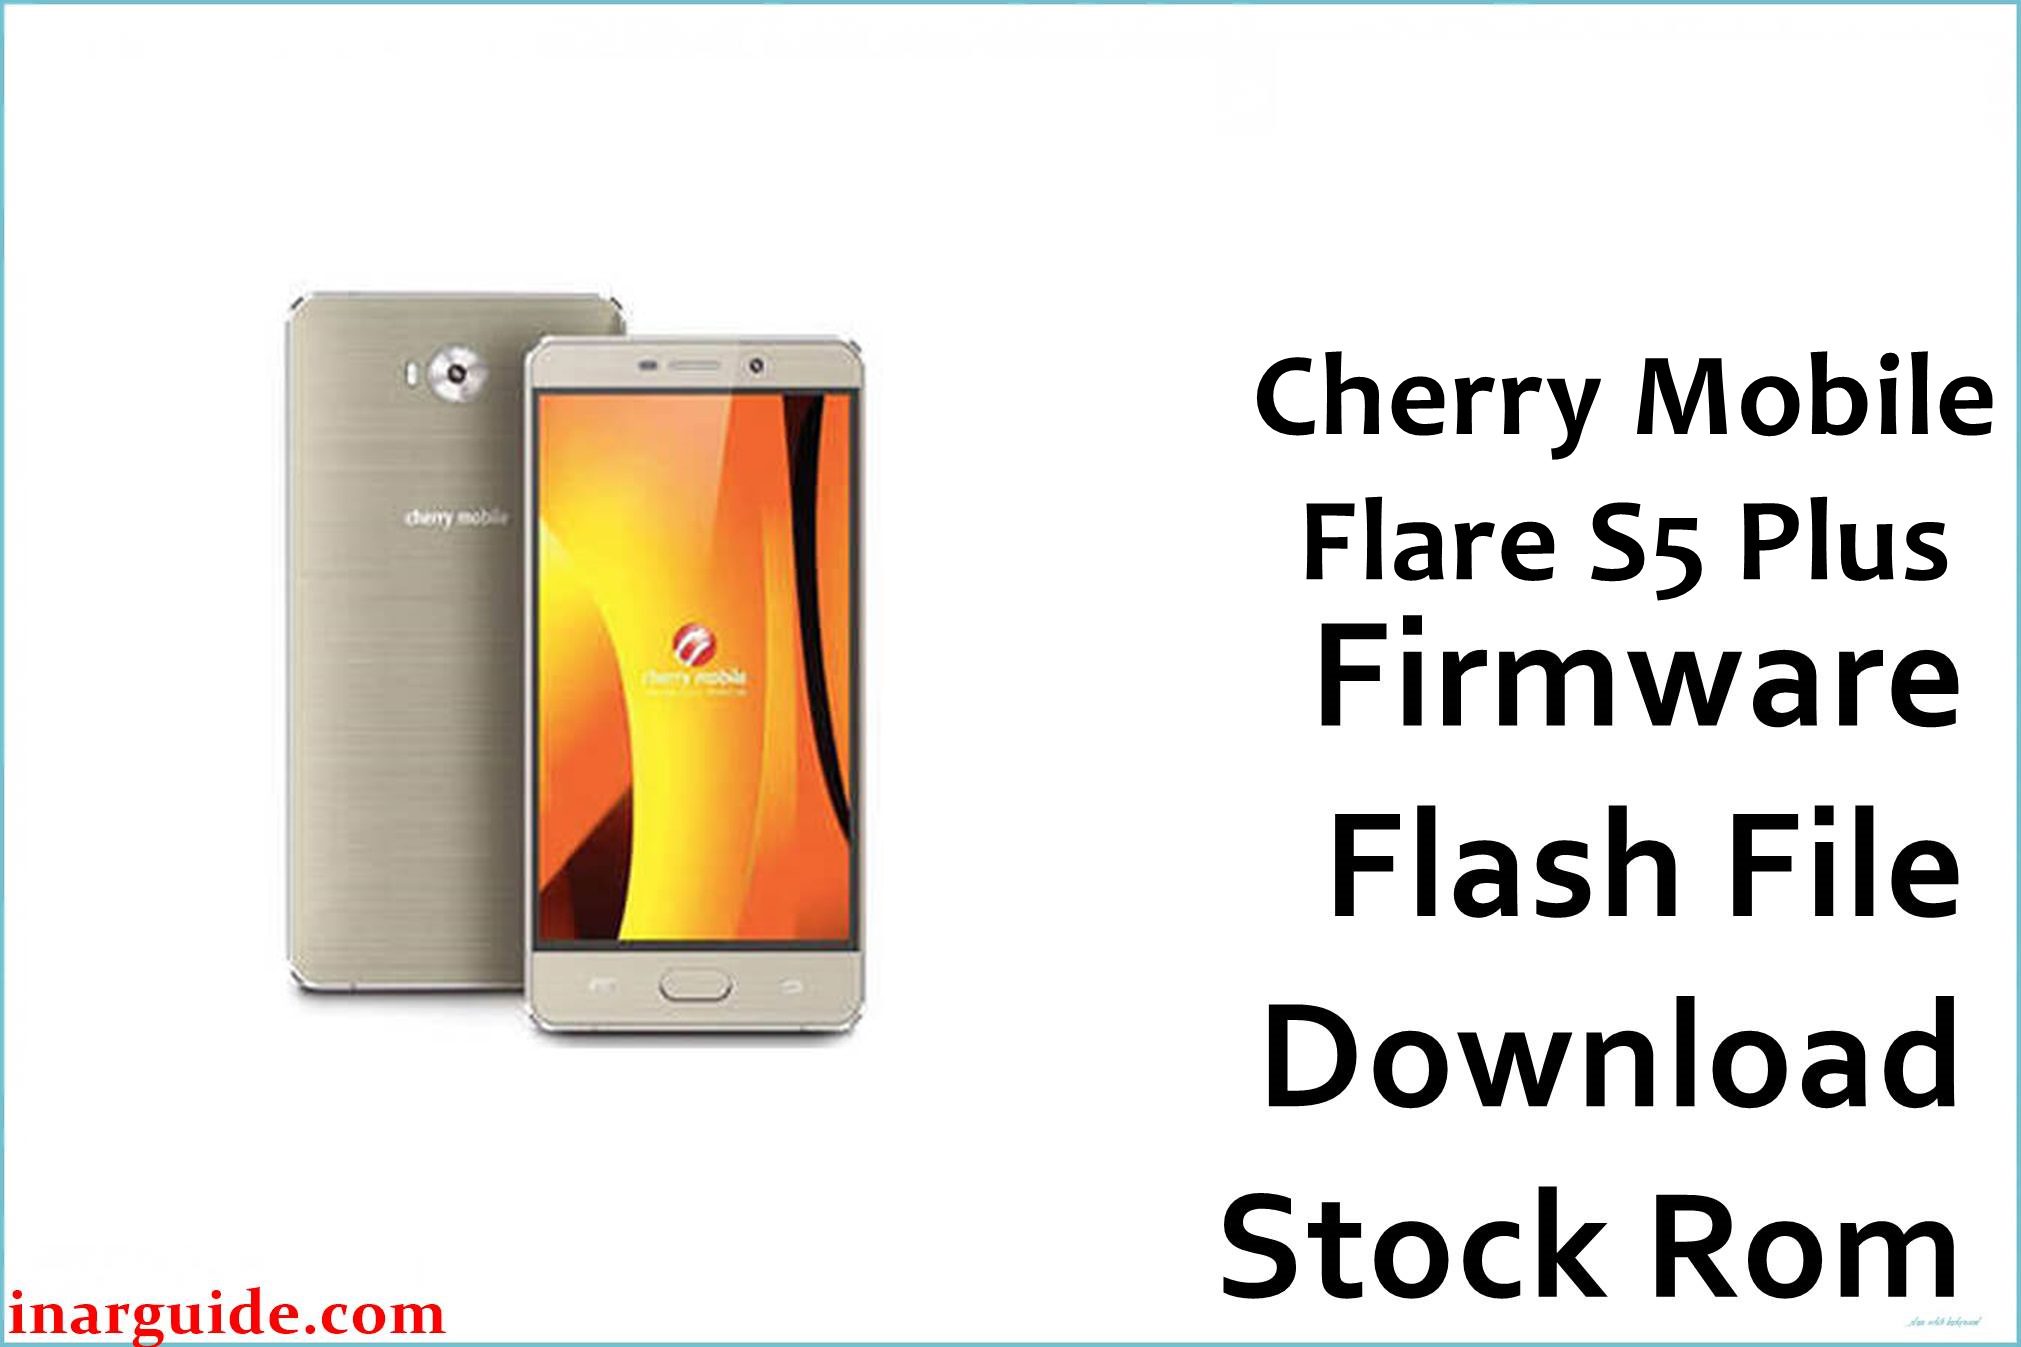 Cherry Mobile Flare S5 Plus